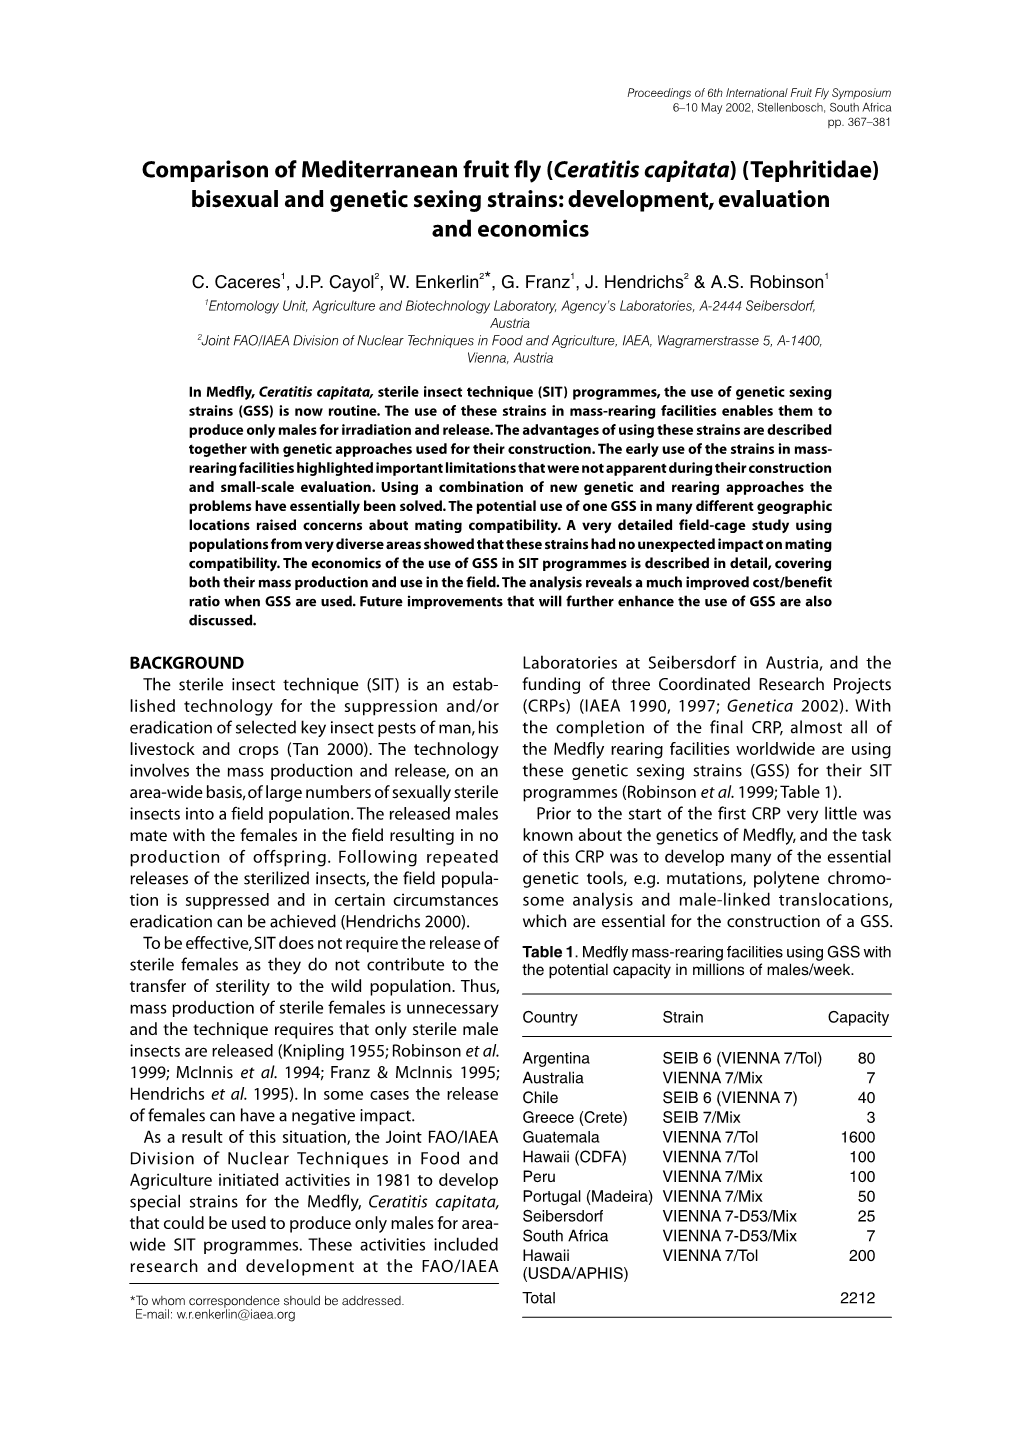 Ceratitis Capitata) (Tephritidae) Bisexual and Genetic Sexing Strains: Development, Evaluation and Economics